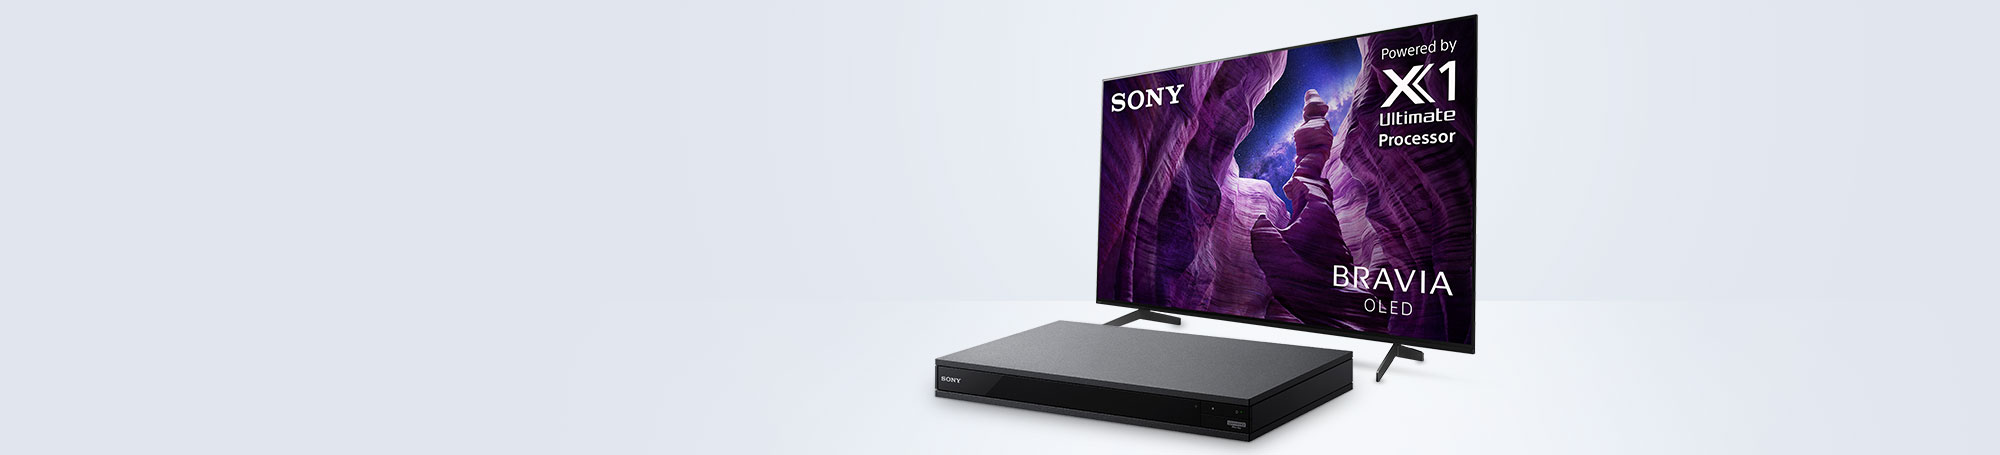 4K Ultra HD Blu-ray player and TV